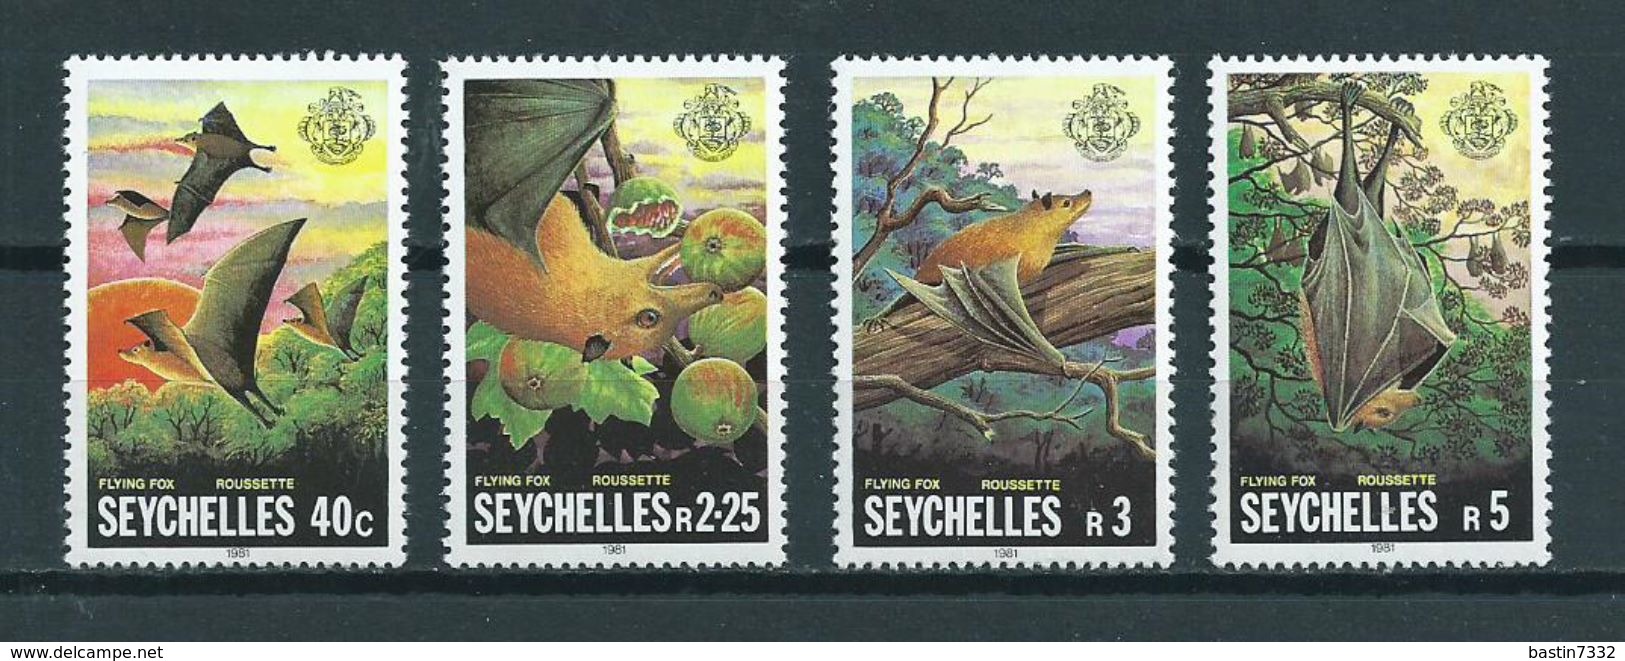 1981 Seychellen/Seychelles Complete Setvleermuizen,bat,fledermaus MNH/Postfris/Neuf Sans Charniere - Vleermuizen